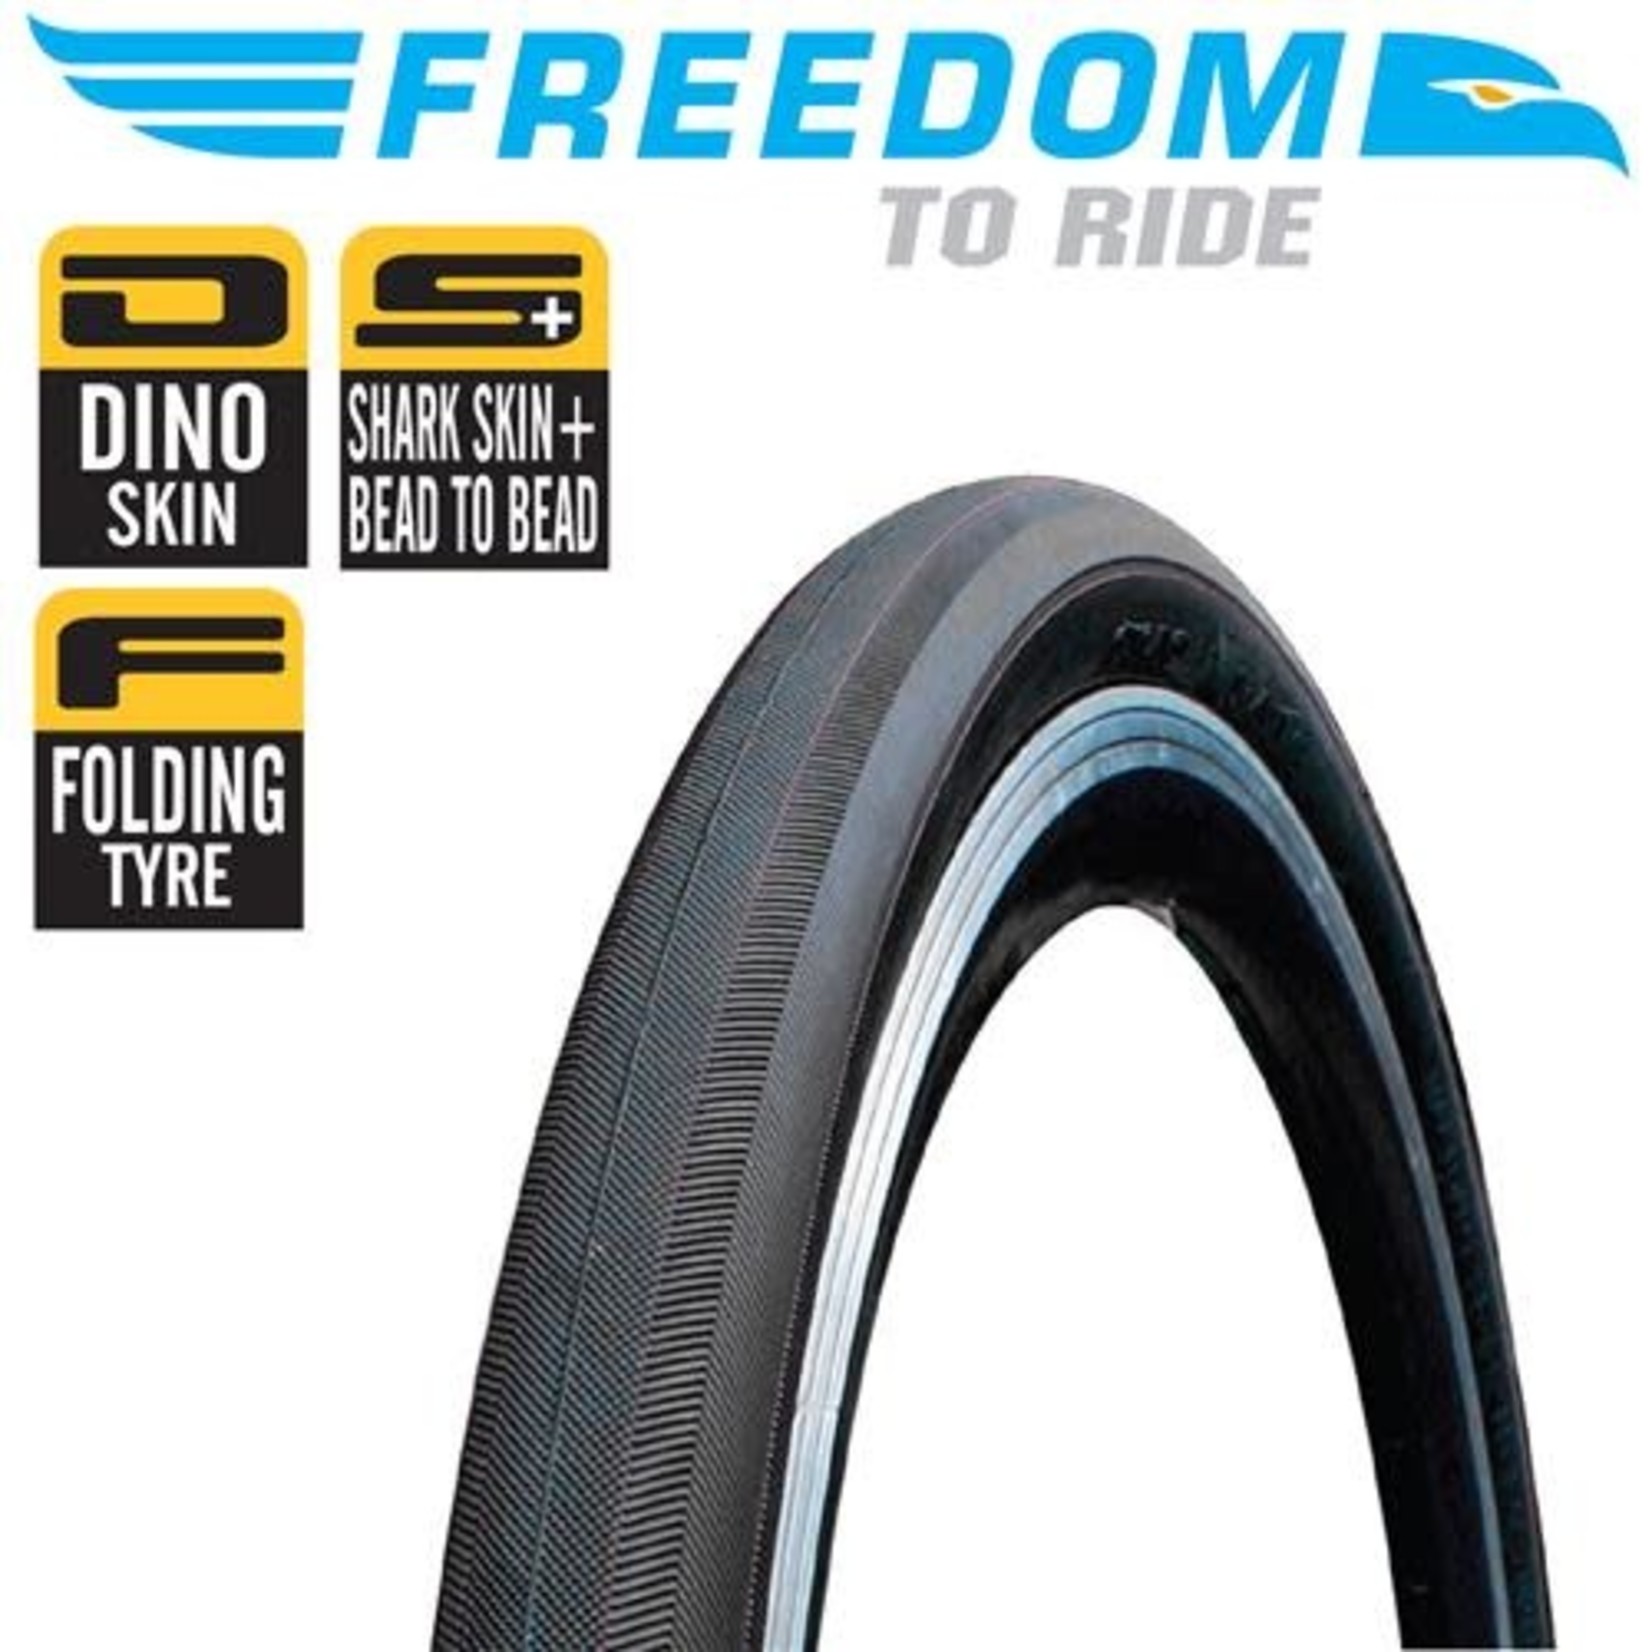 Freedom 2 X Freedom Bike Tyre - Mustang - 700 X 28C - Dino Skin - Foldable Tyre (Pair)